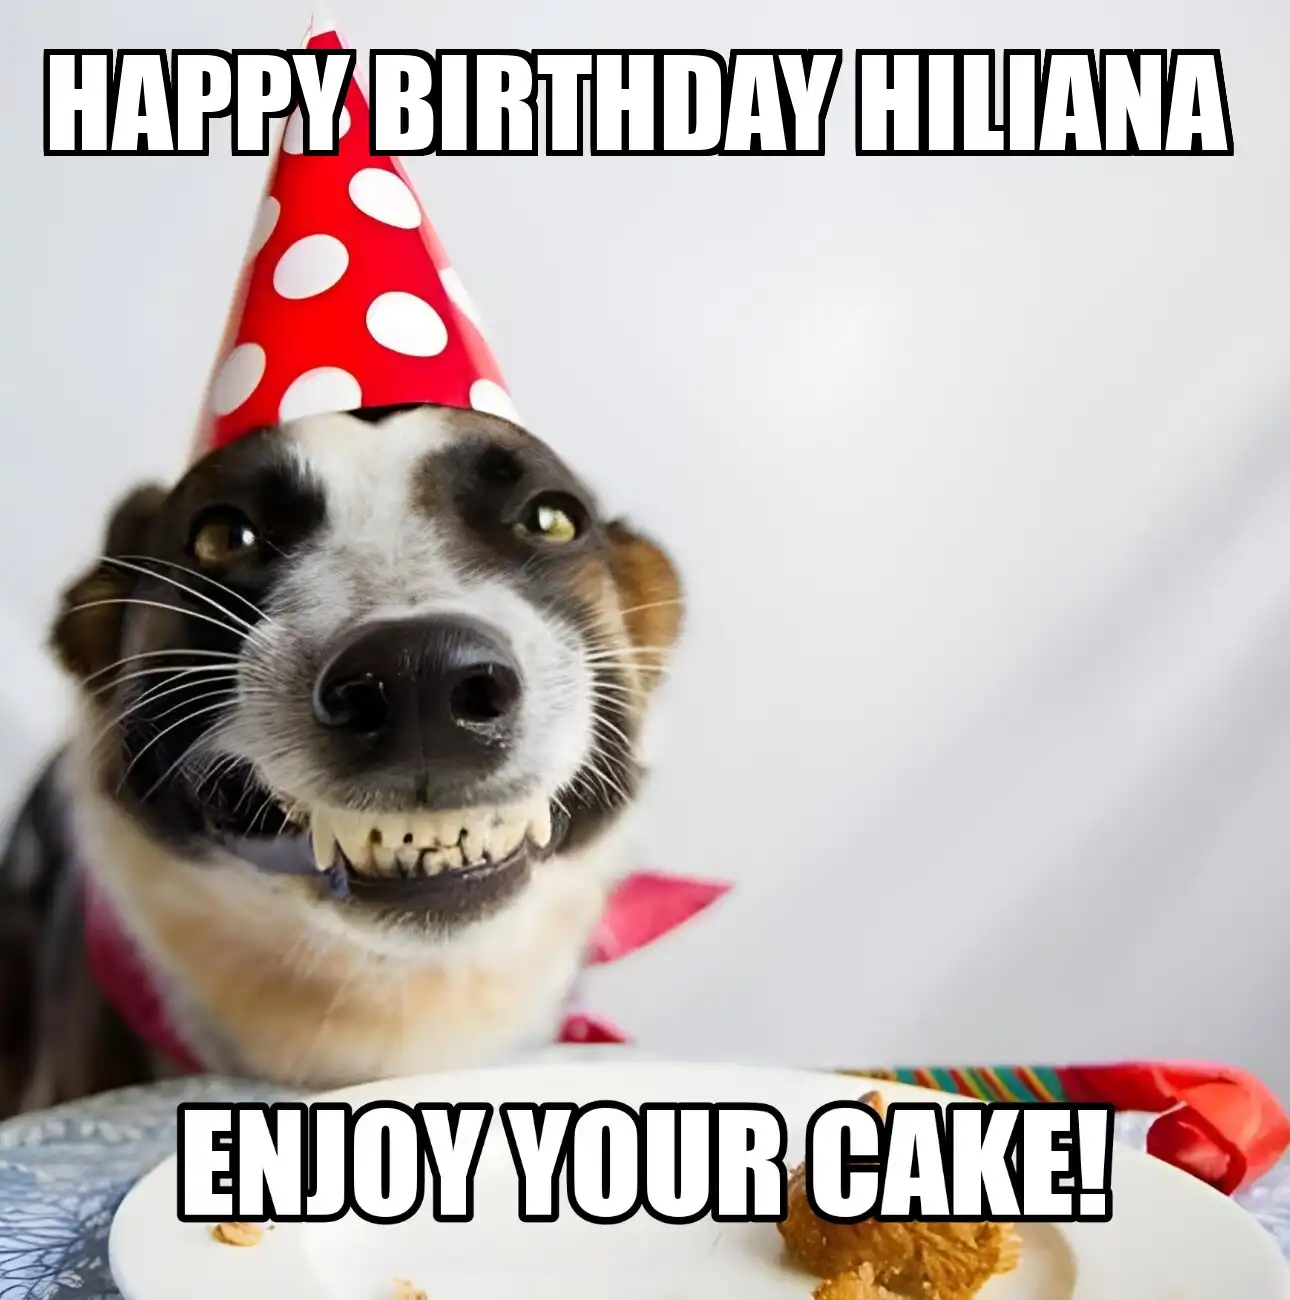 Happy Birthday Hiliana Enjoy Your Cake Dog Meme